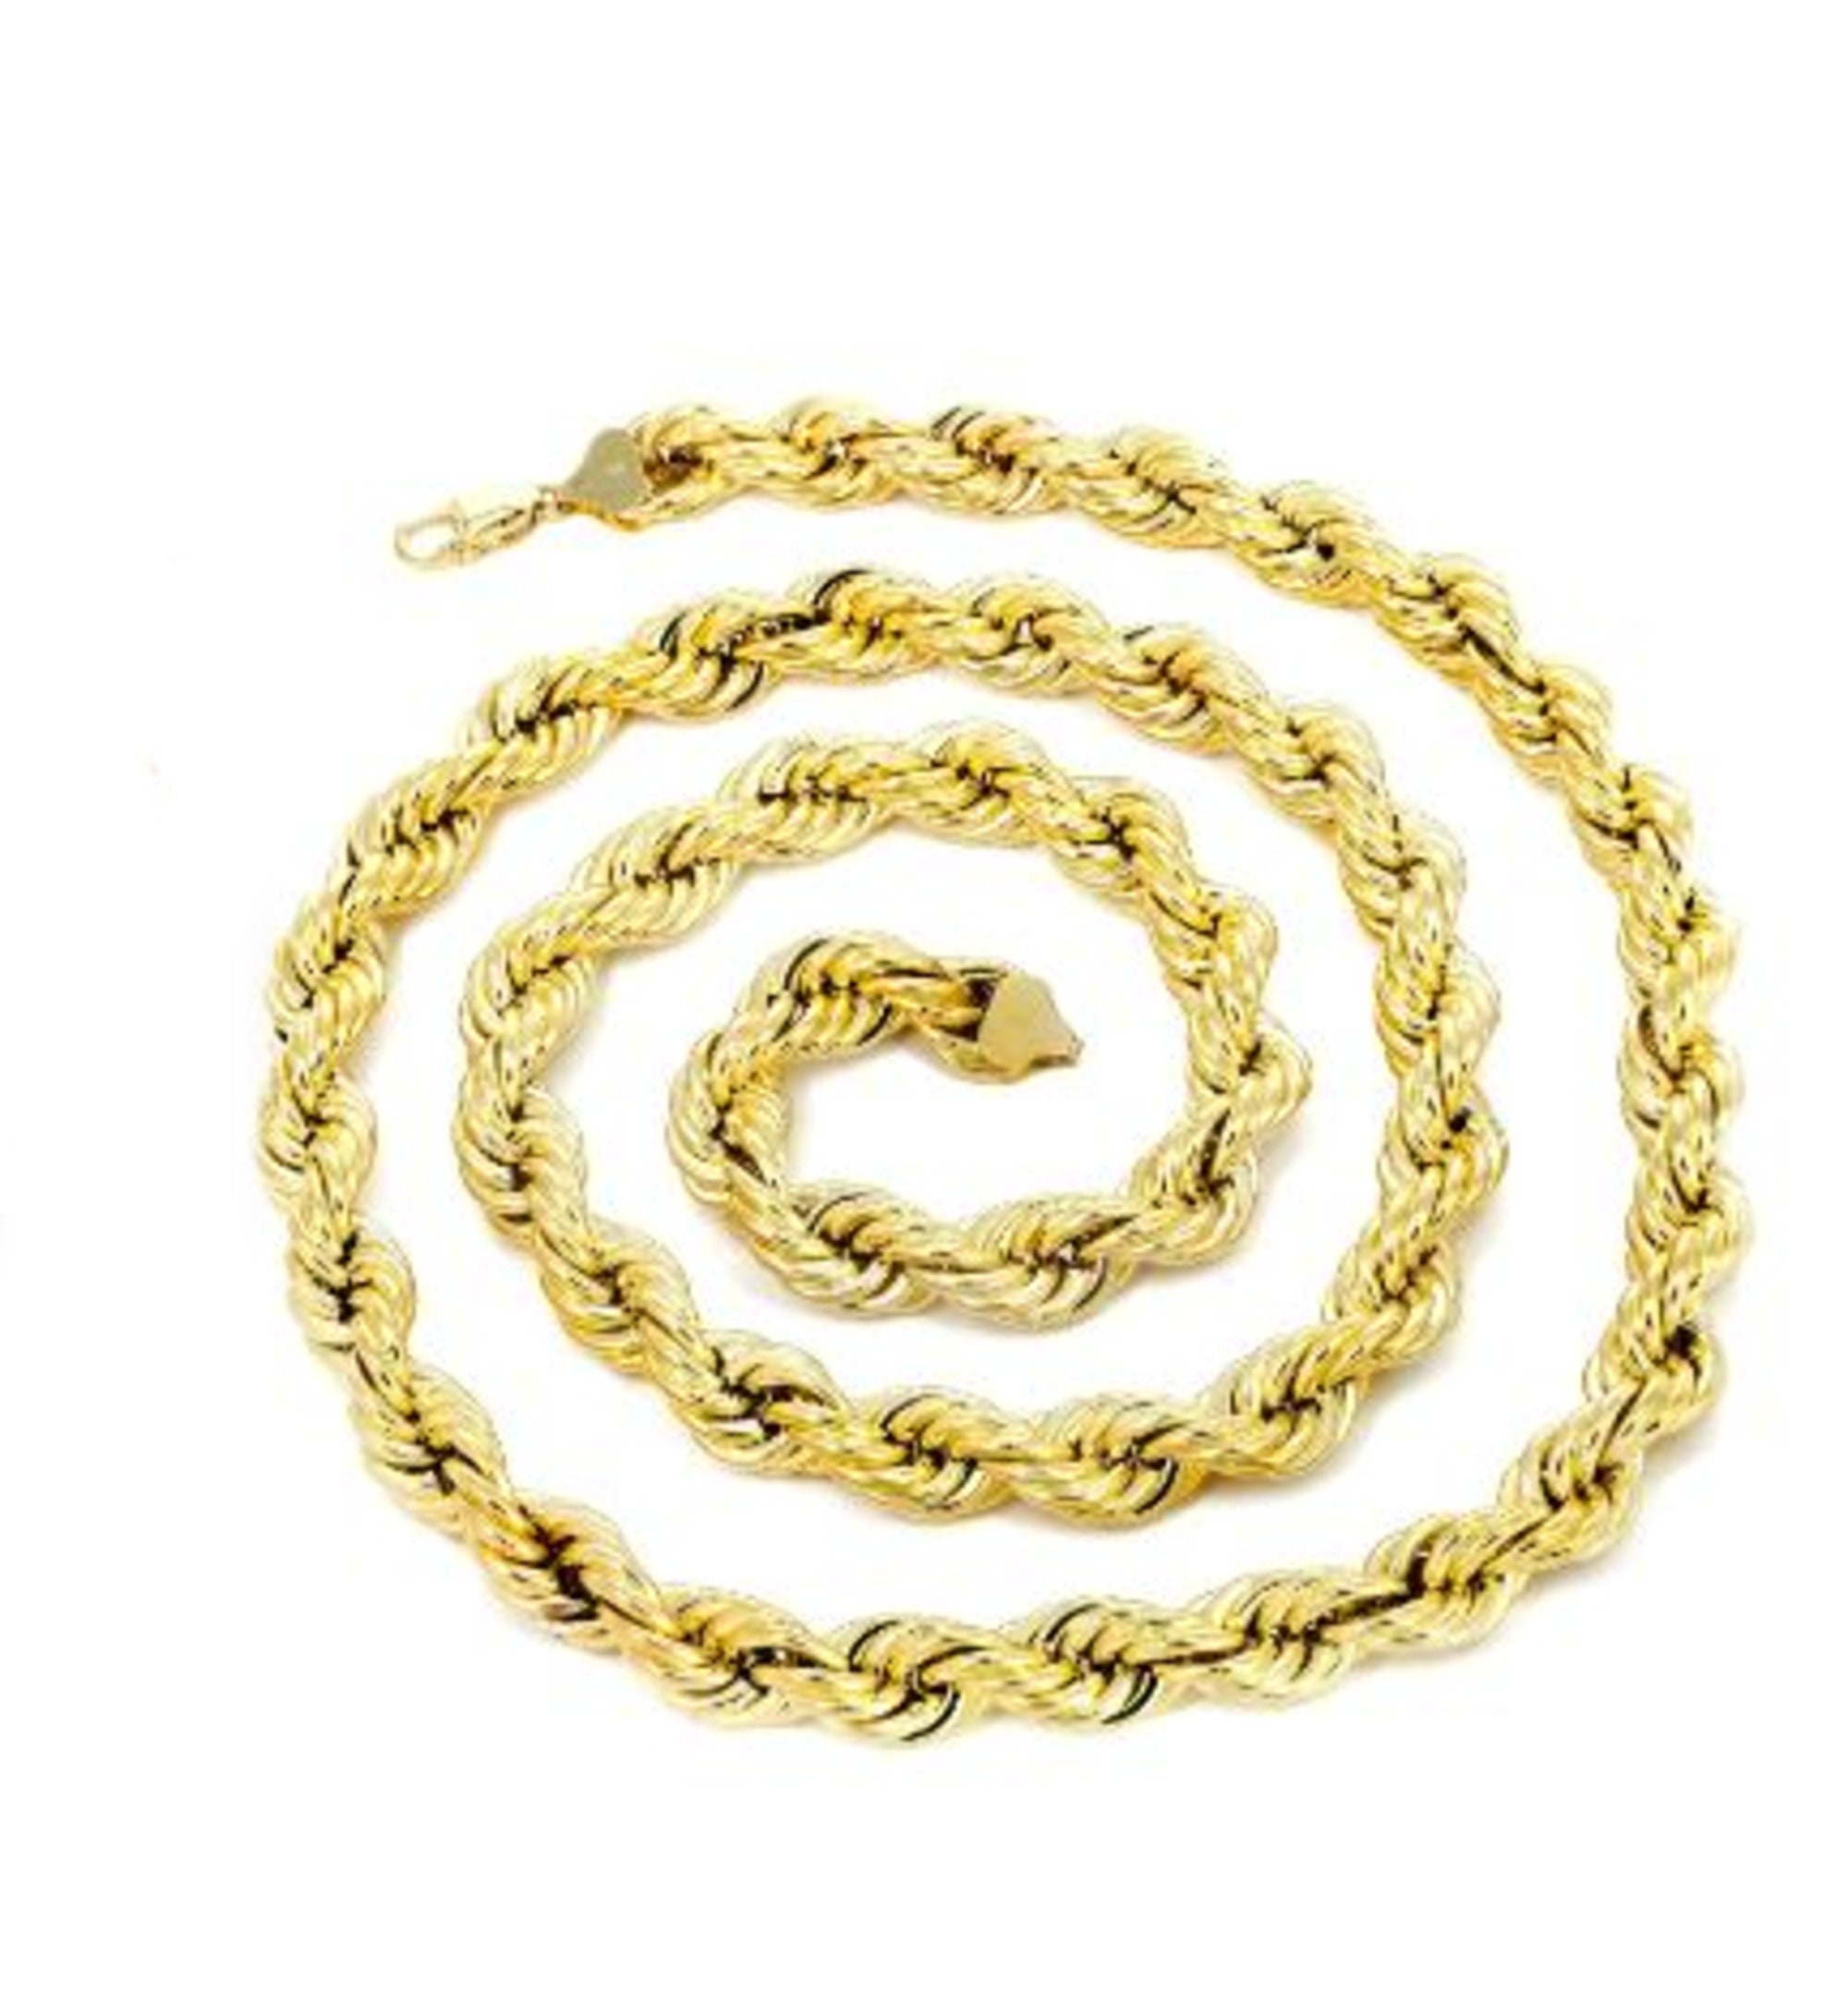 Men's Rope Chain in 14k Yellow Gold 5.5mm Diamond Cut - Etsy